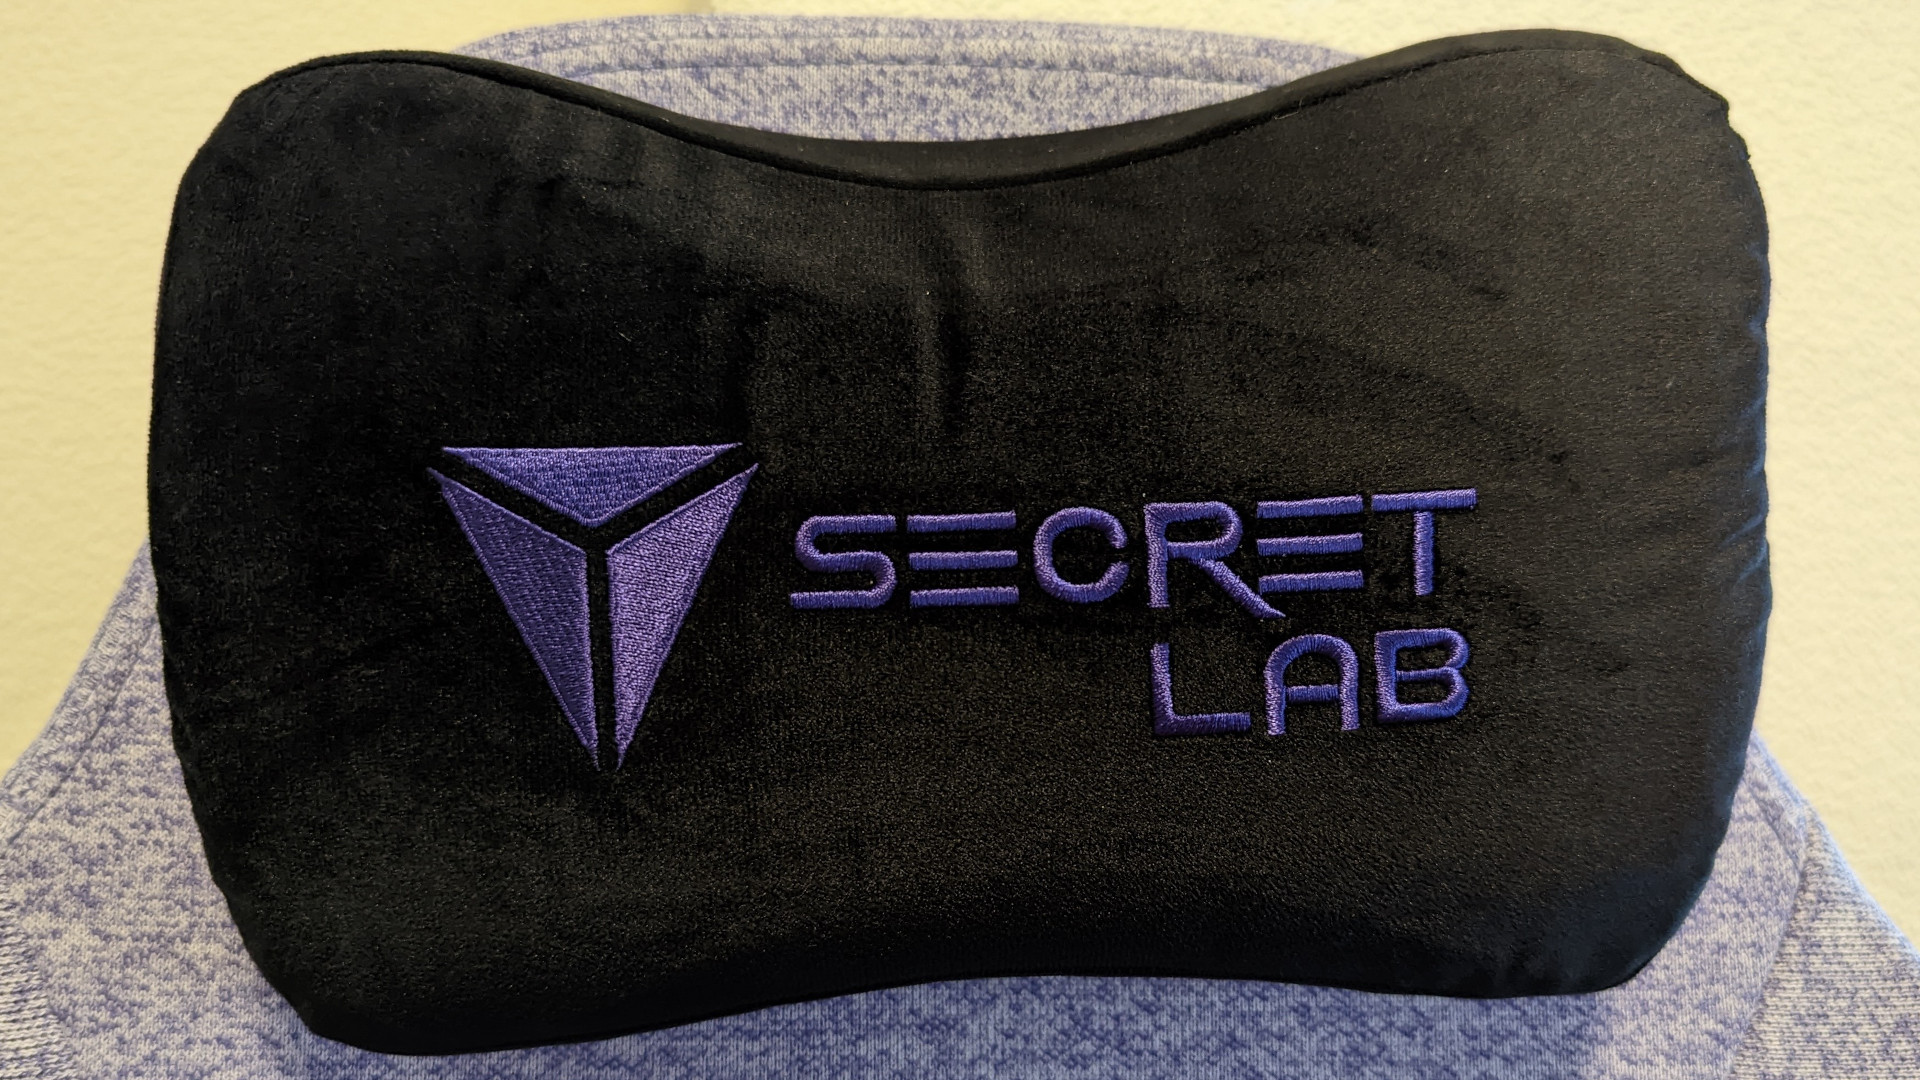 The Secretlab logo on its blakc magnetic memory foam head pillow